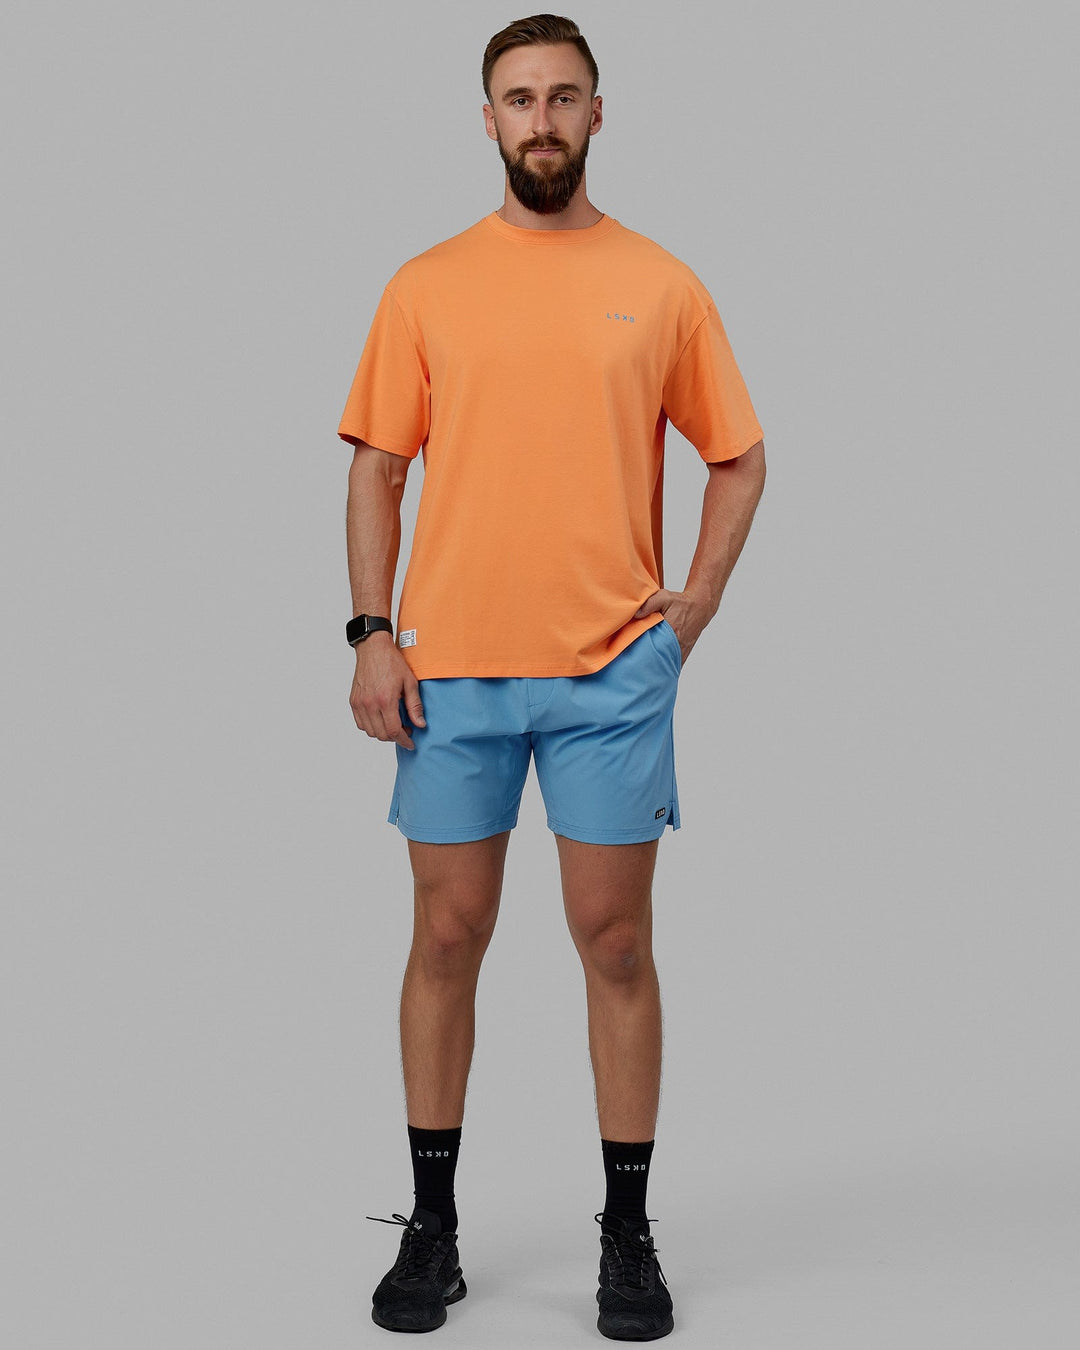 Man wearing Unisex VS6 FLXCotton Tee Oversize - Tangerine-Azure Blue